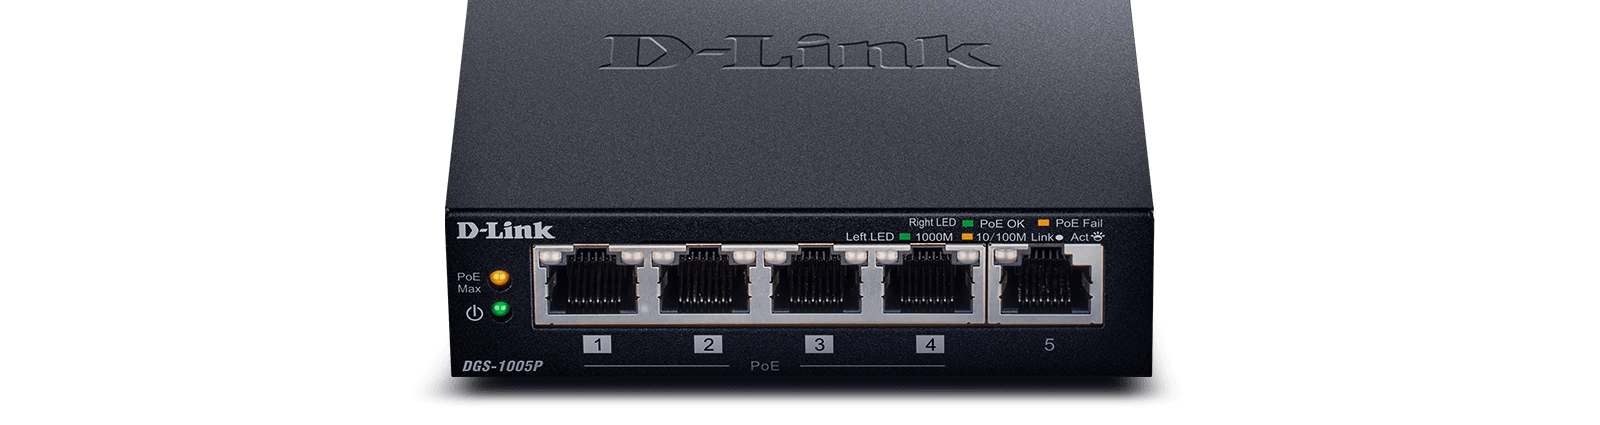 DGS-1005P - 5-Port Desktop Gigabit PoE+ Switch